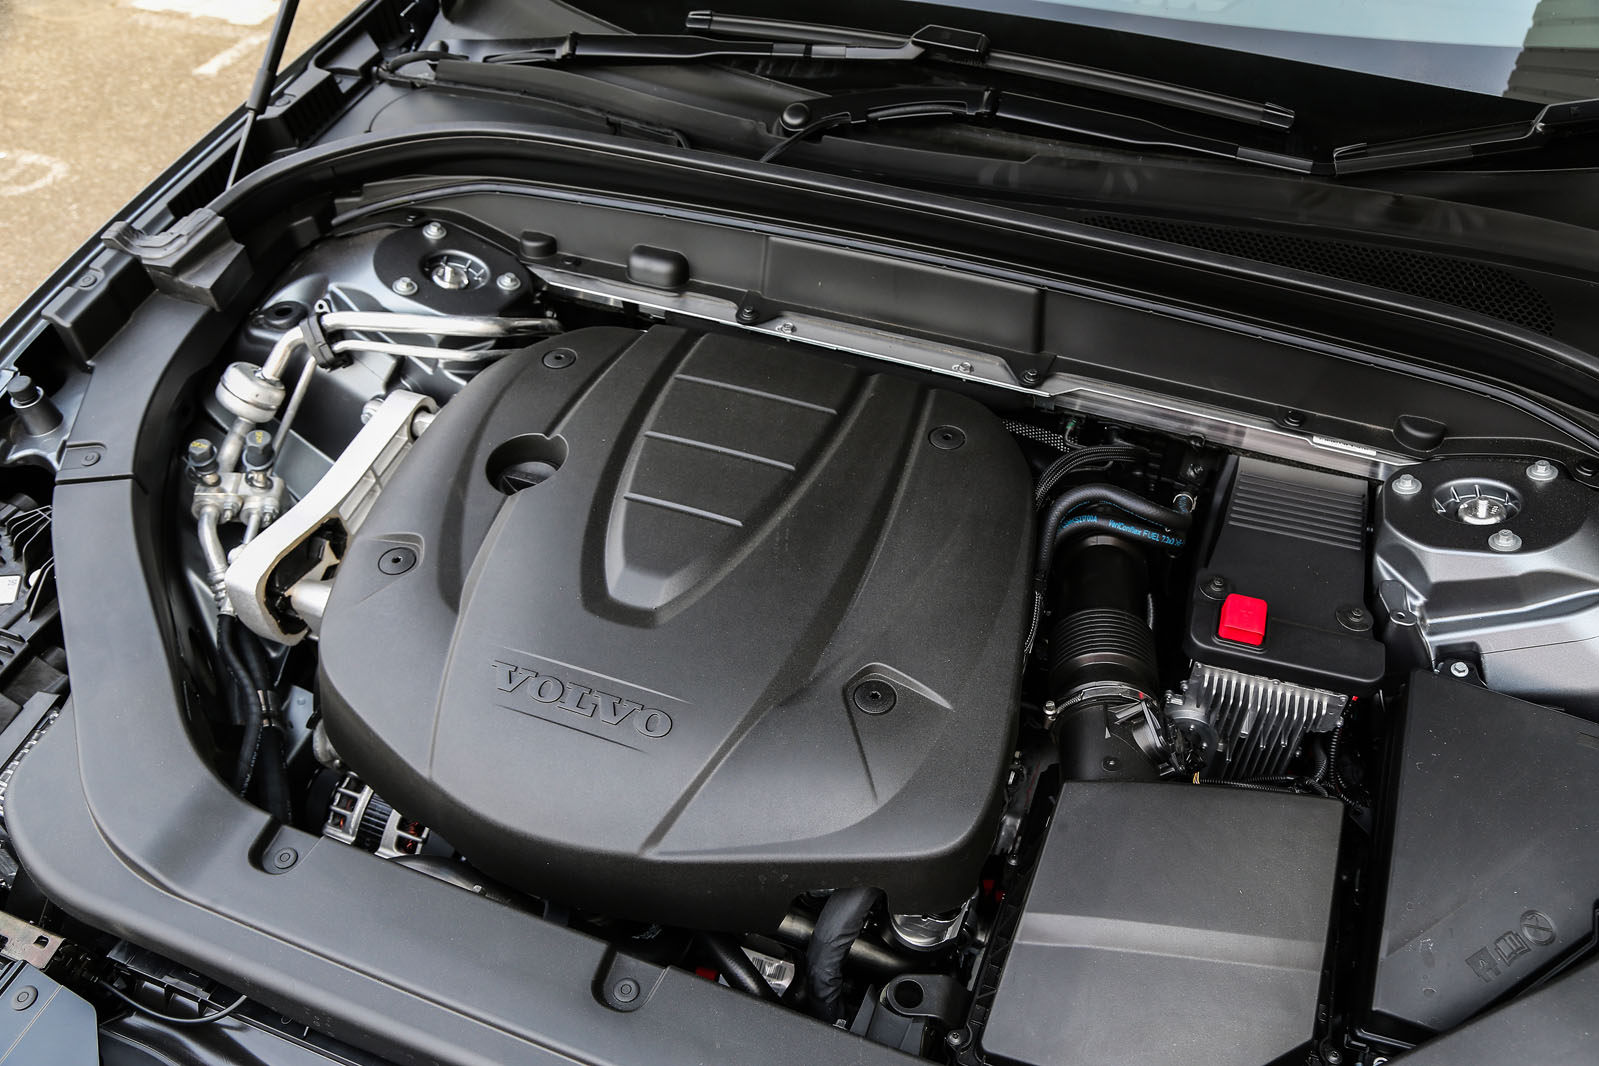 Volvo XC60 engines & performance | Autocar